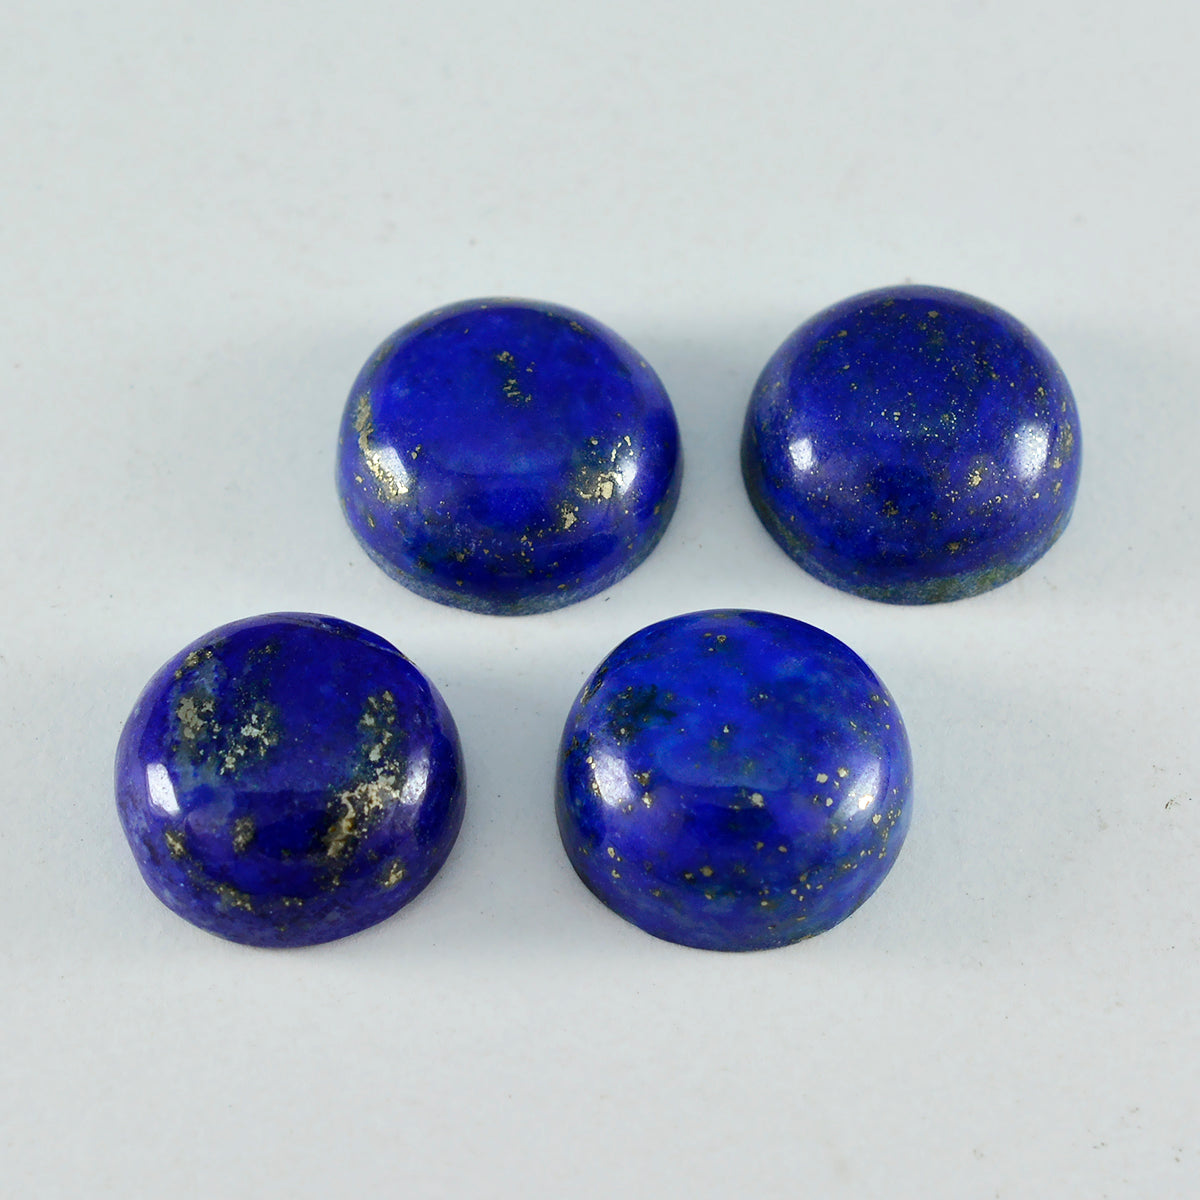 Riyogems 1PC Blauwe Lapis Lazuli Cabochon 15x15 mm Ronde Vorm prachtige Kwaliteit Losse Steen